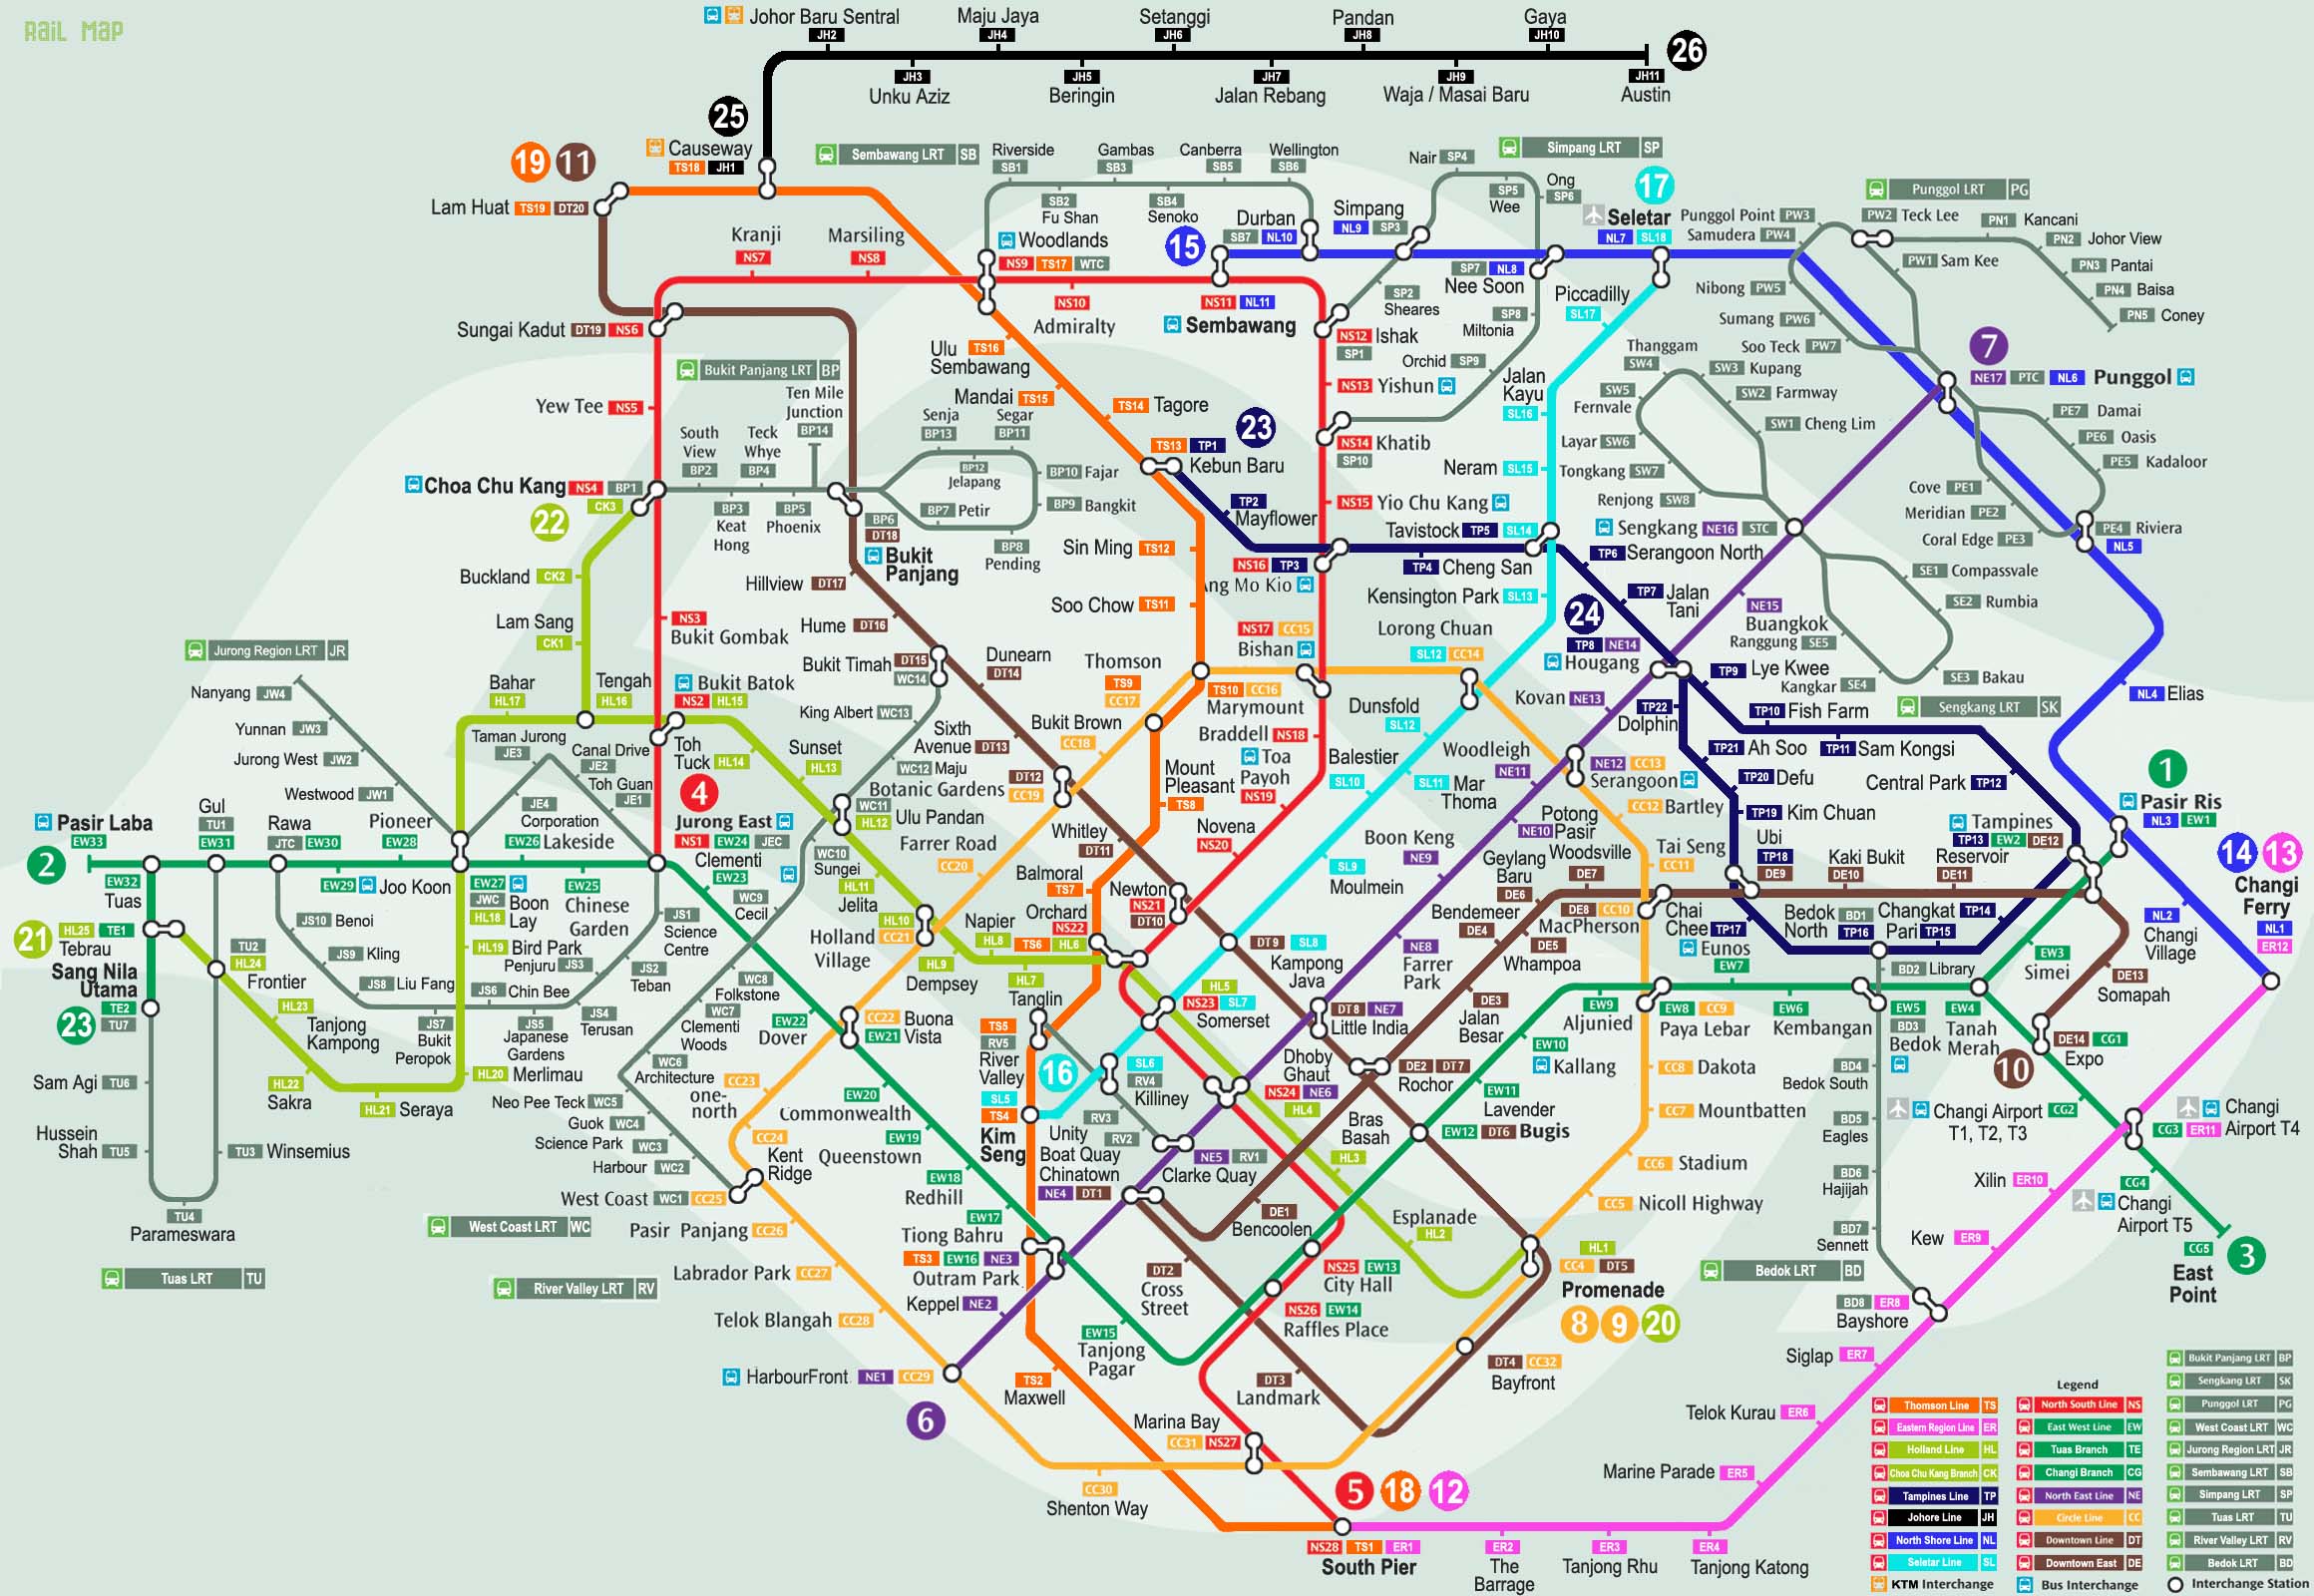 Future Singapore MRT / LRT Lines - MyHomeTown.sg - Forum ...